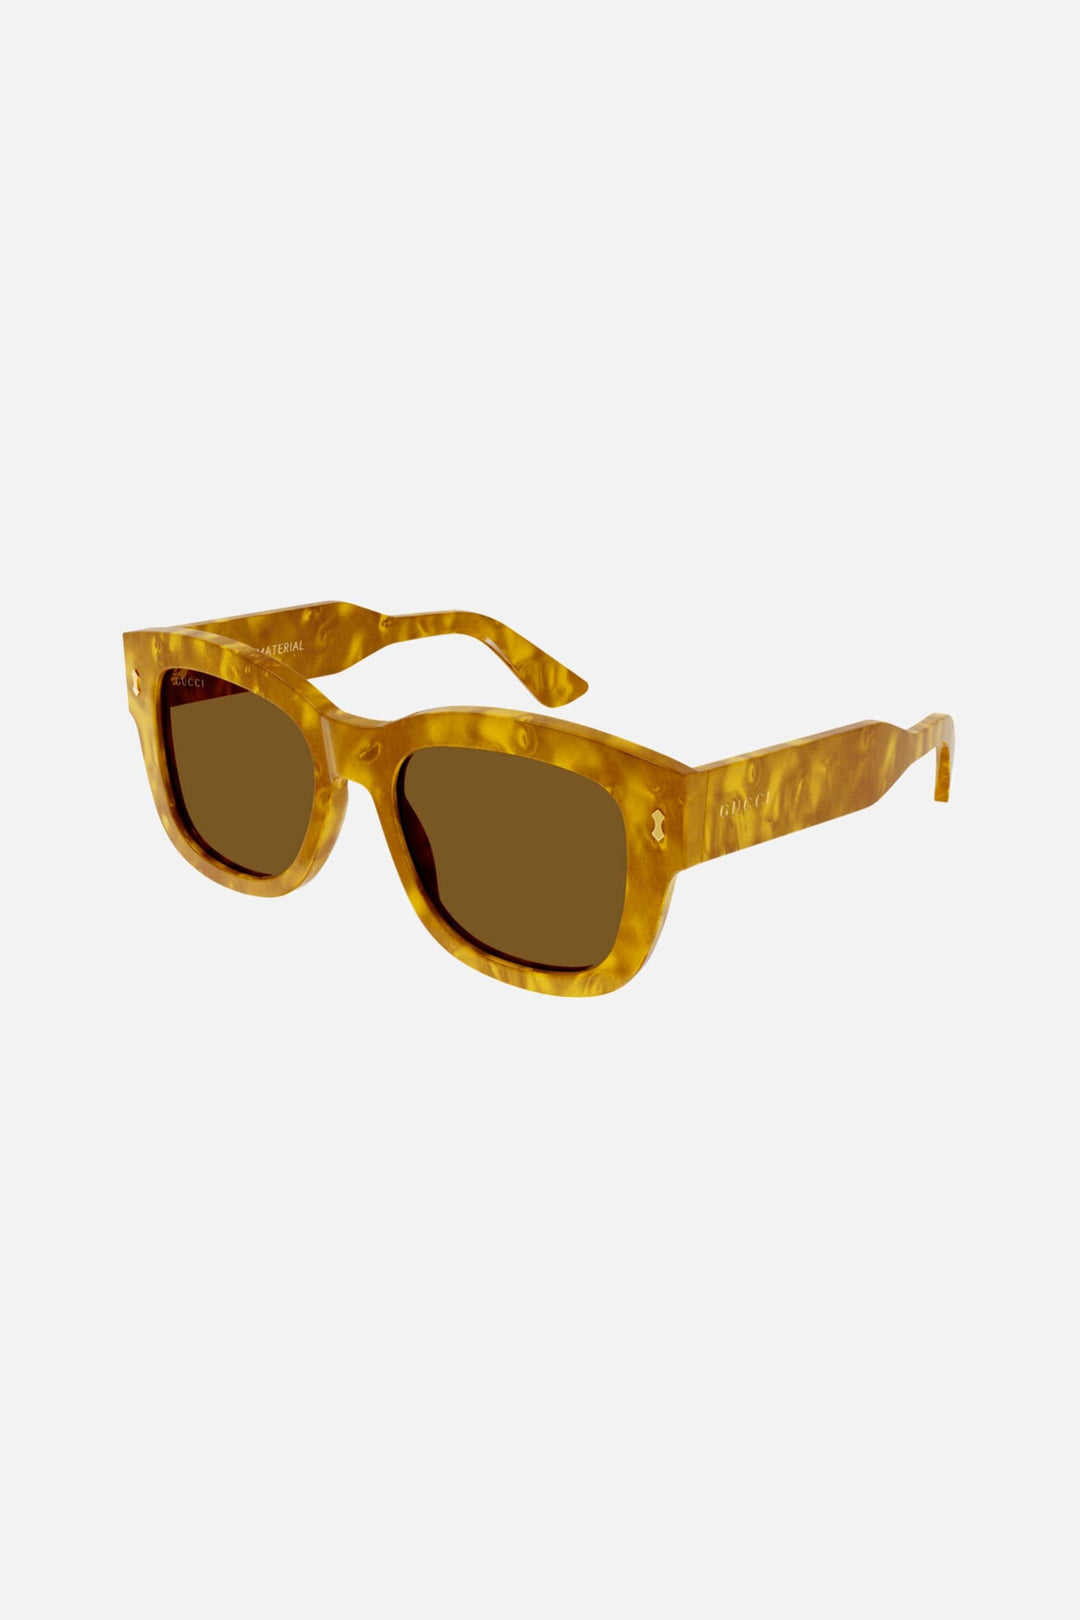 Gucci squared sustainable yellow sunglasses - Eyewear Club